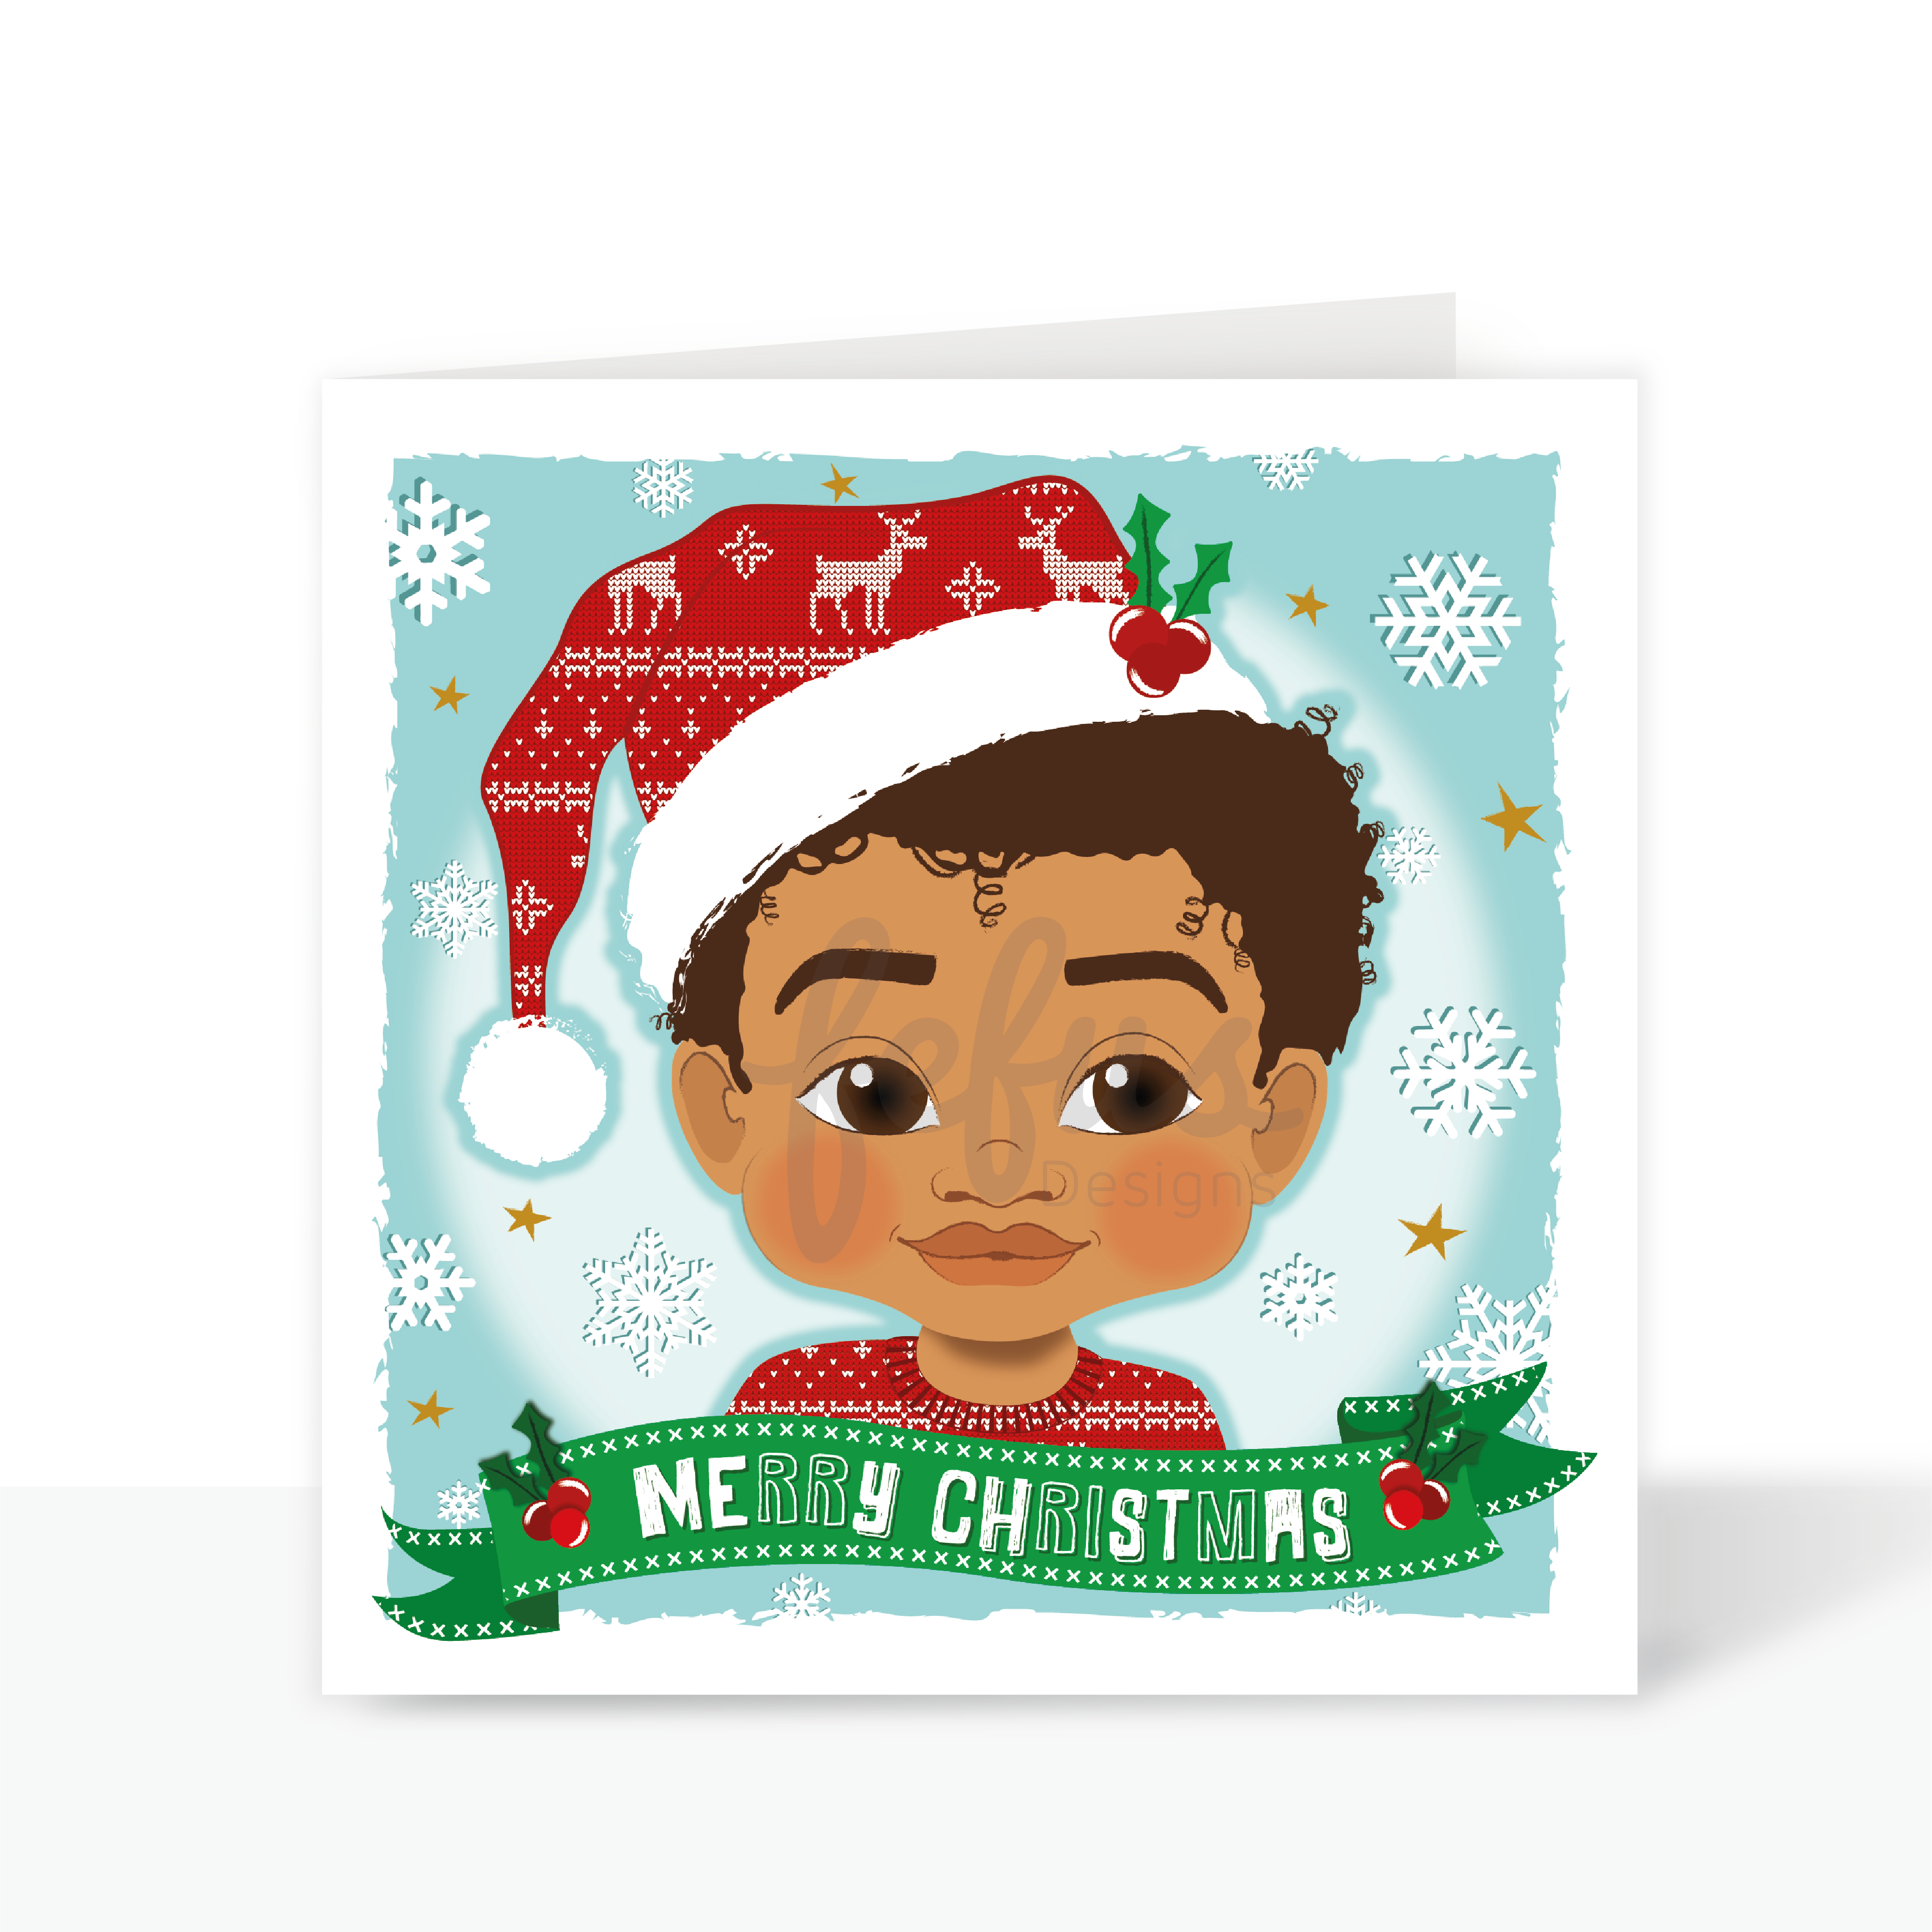 Toddler Brown Boy Joy Christmas Card  | Fefus designs